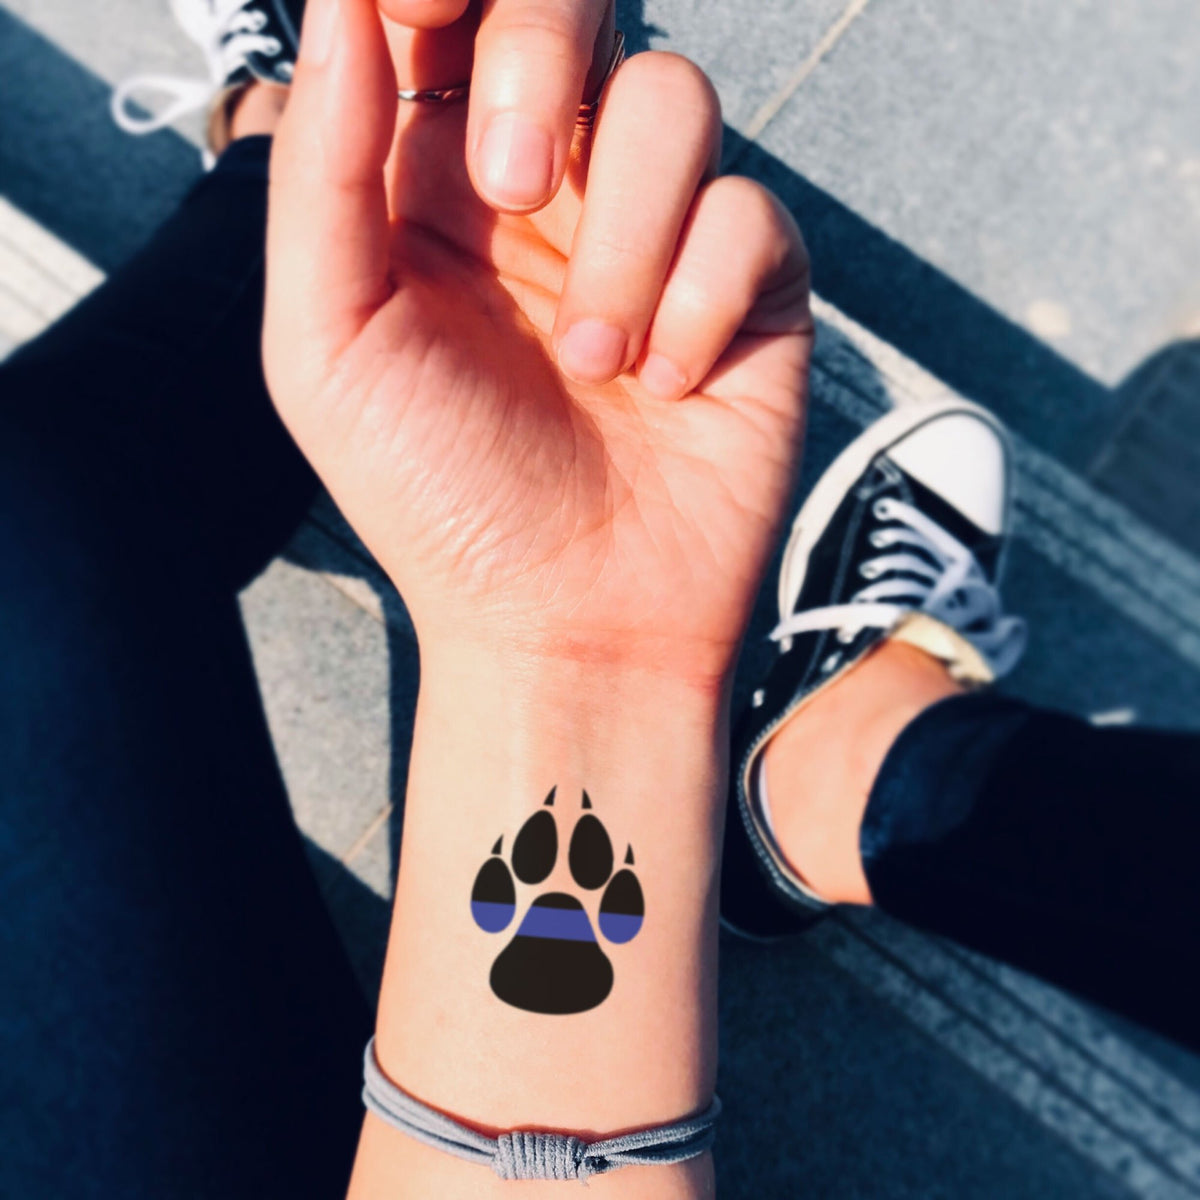 Sheepdog Temporary Tattoo Sticker - OhMyTat